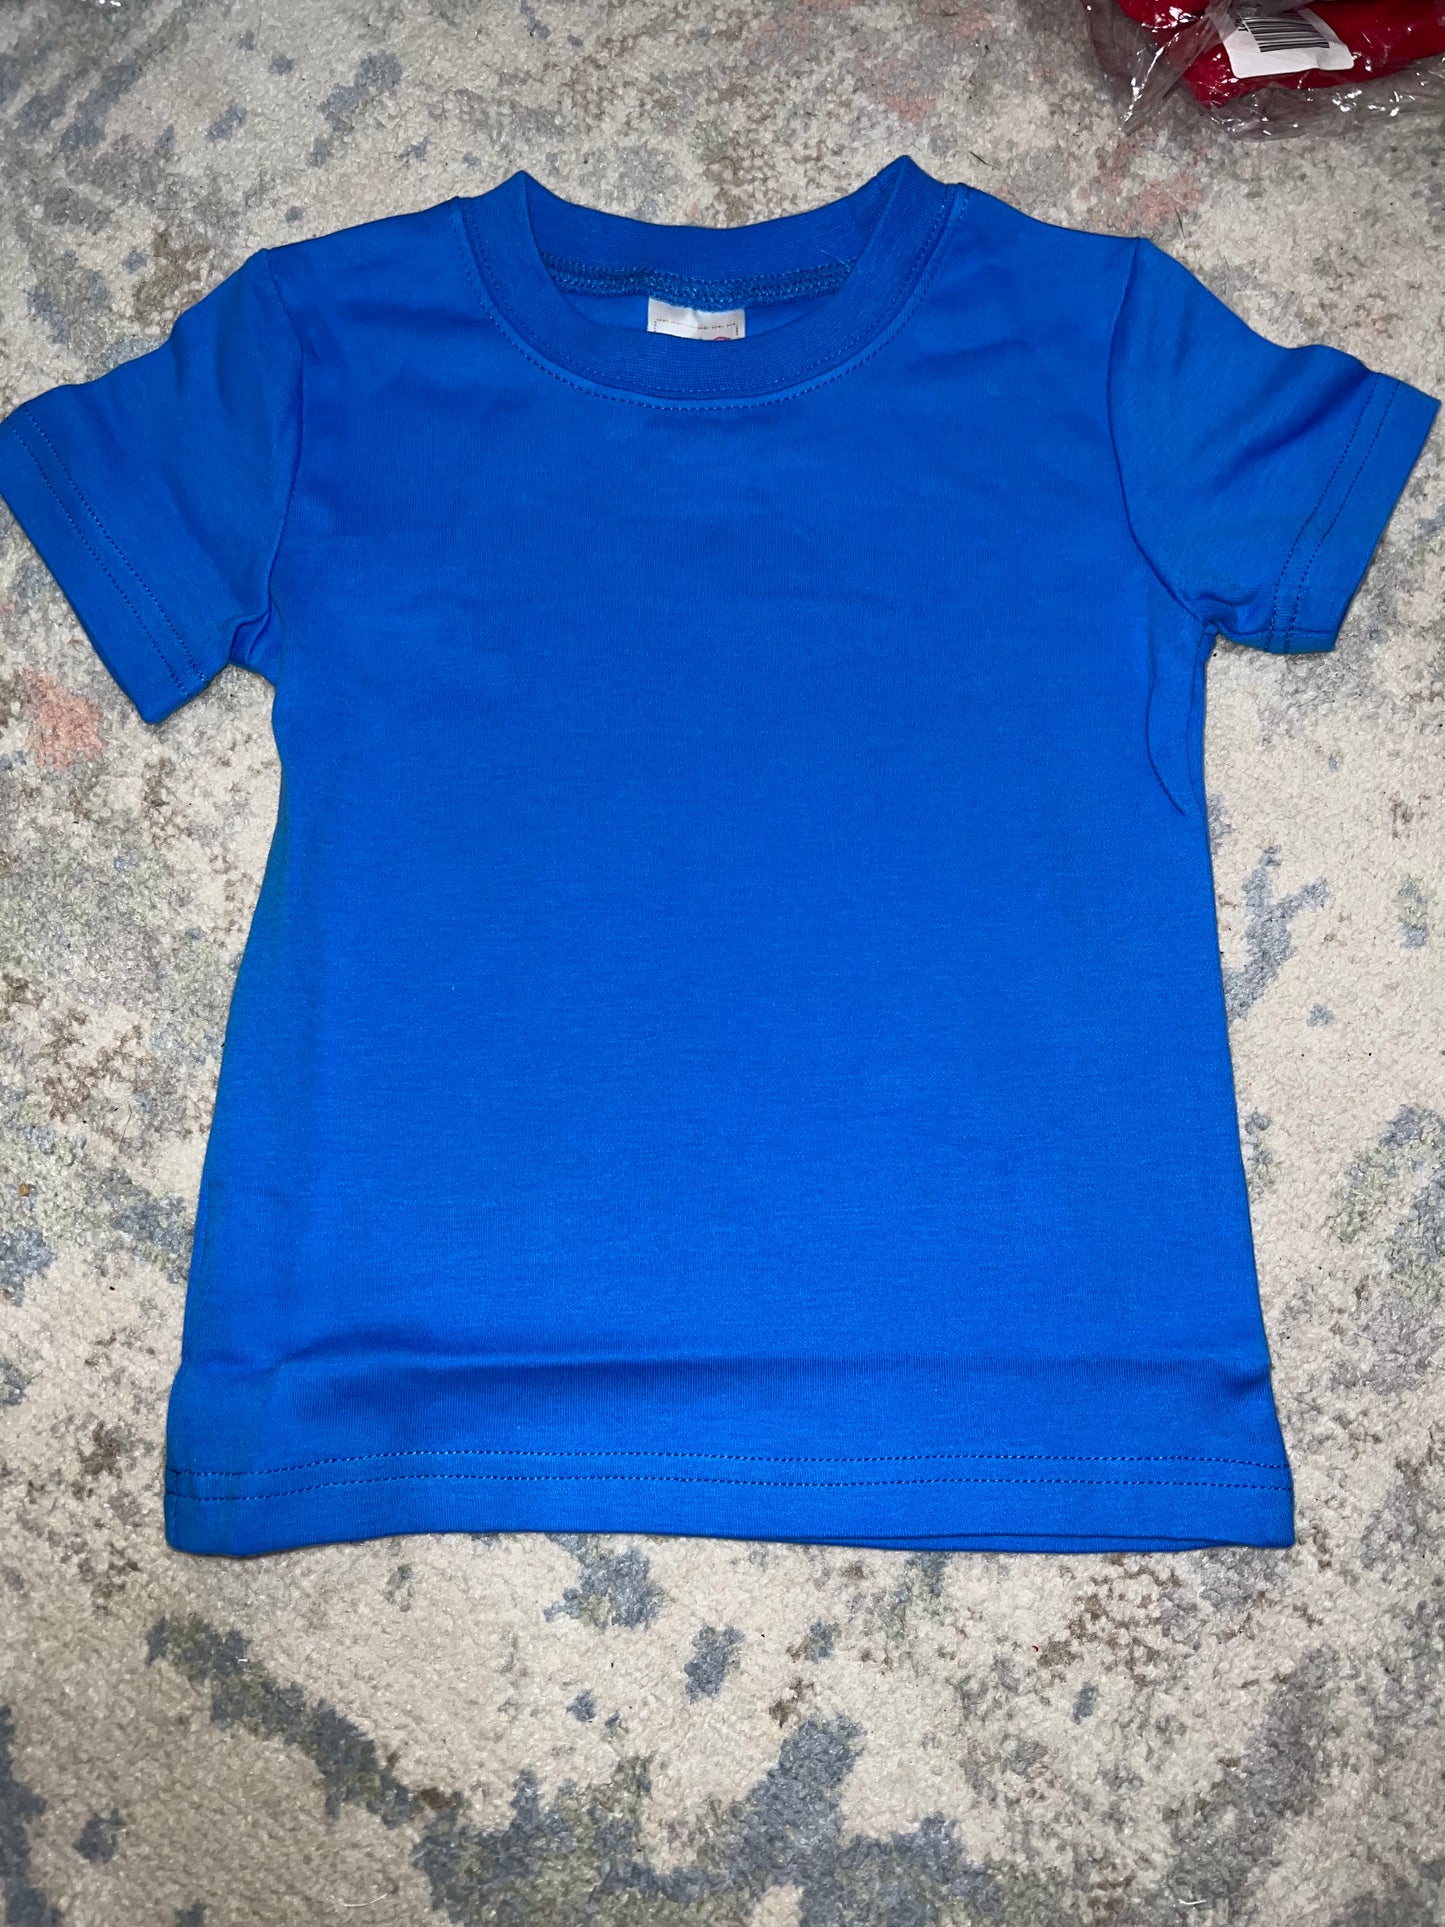 Rts-blue t shirt